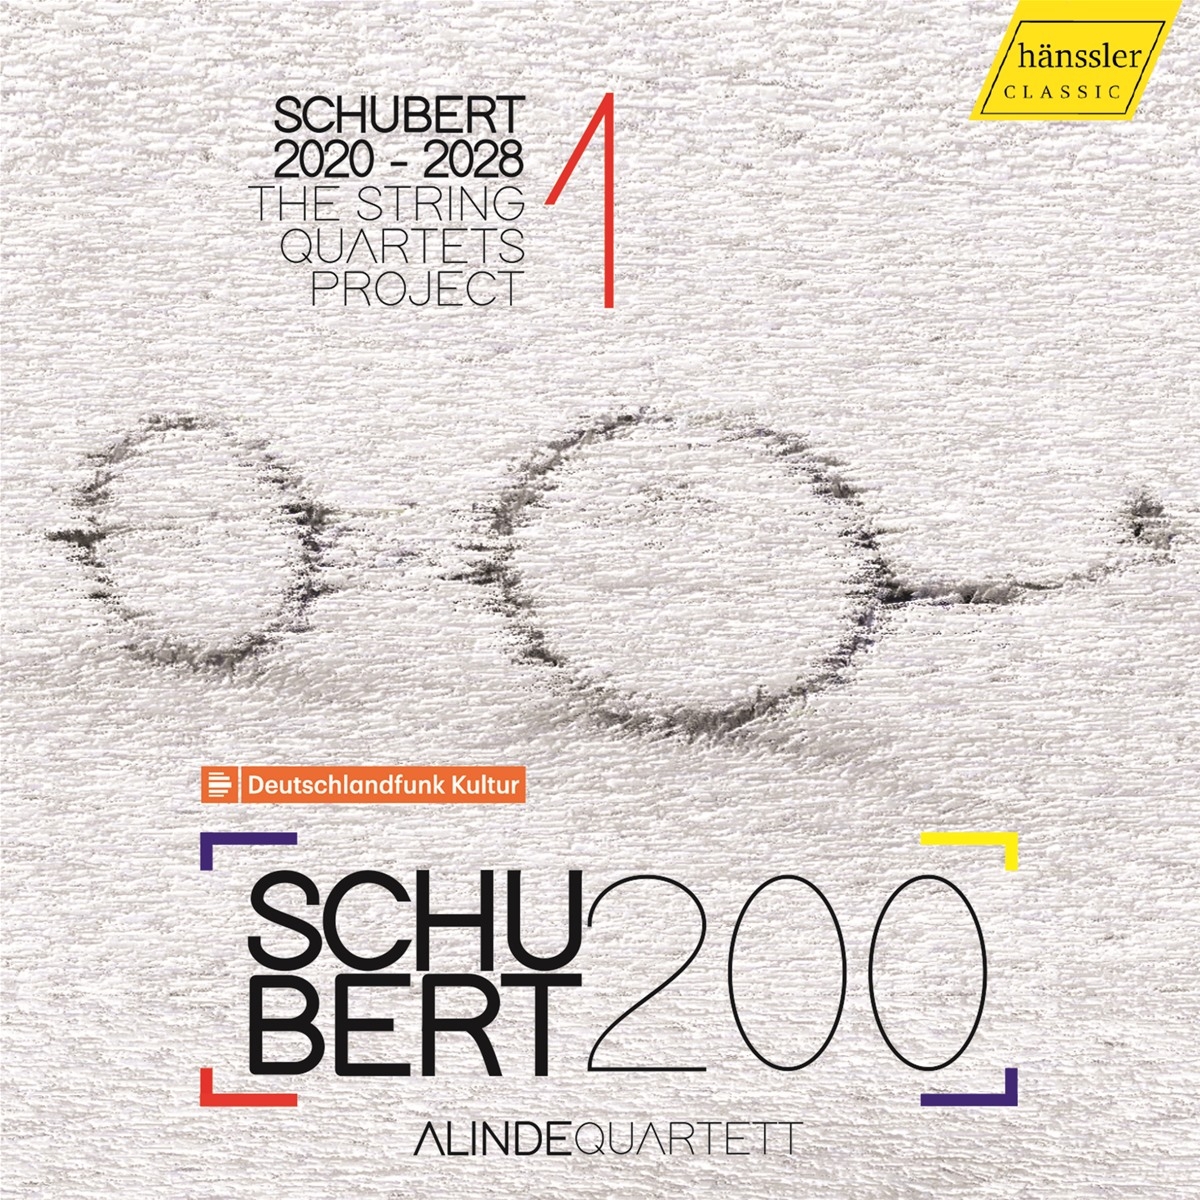 Schubert 2020-2028-The String Quartets Project 1